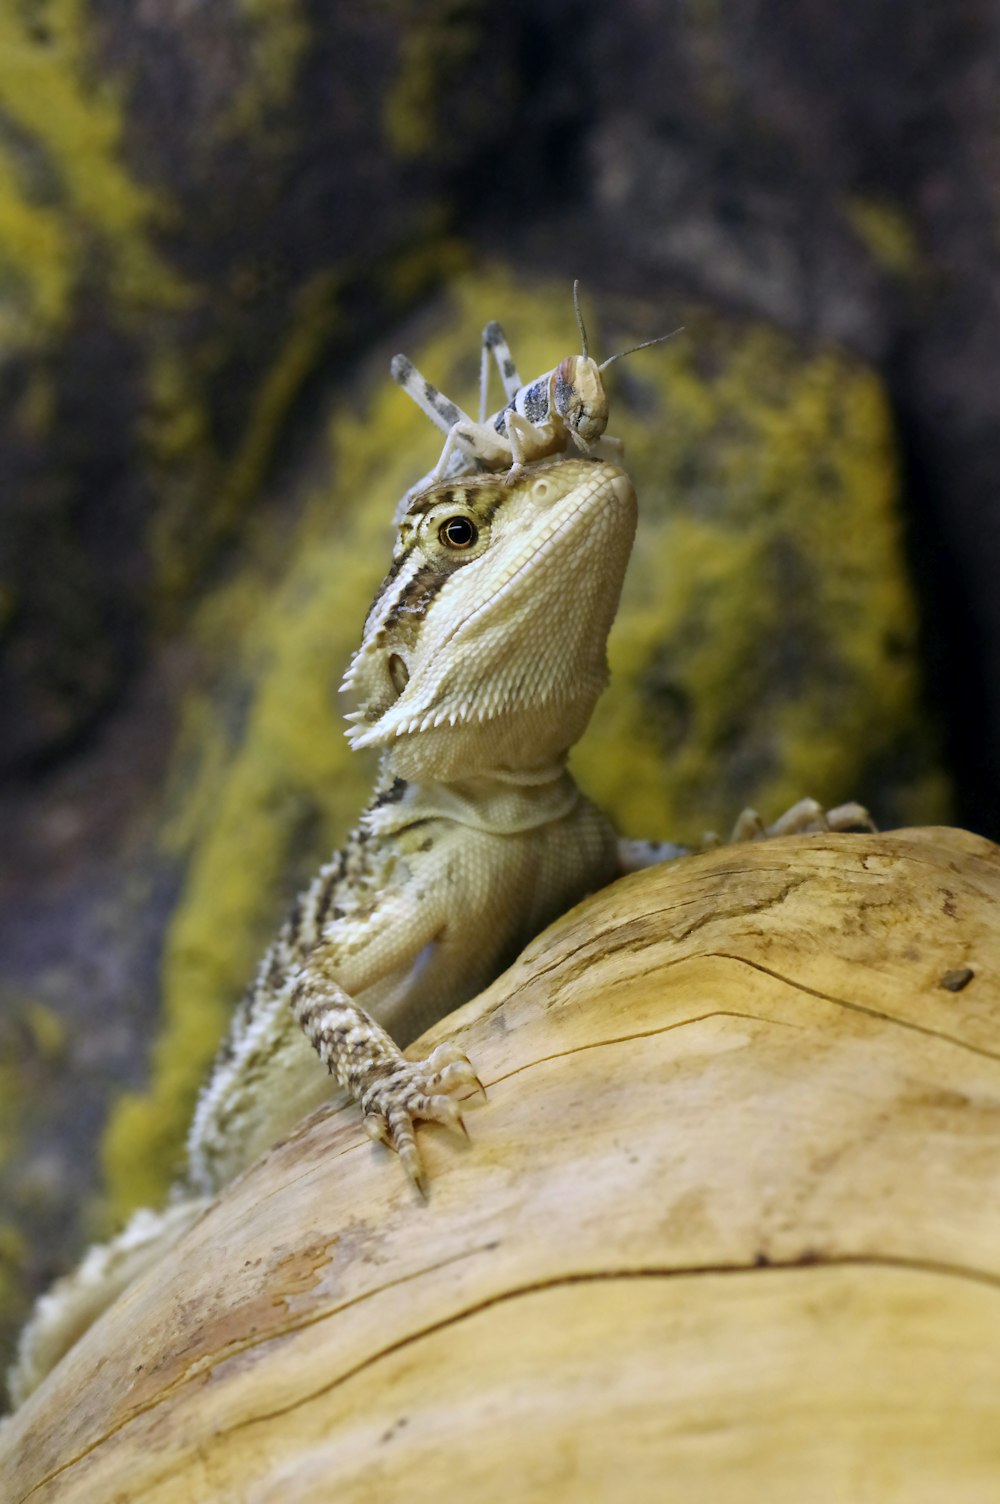 grasshopper on bearded dragon's head